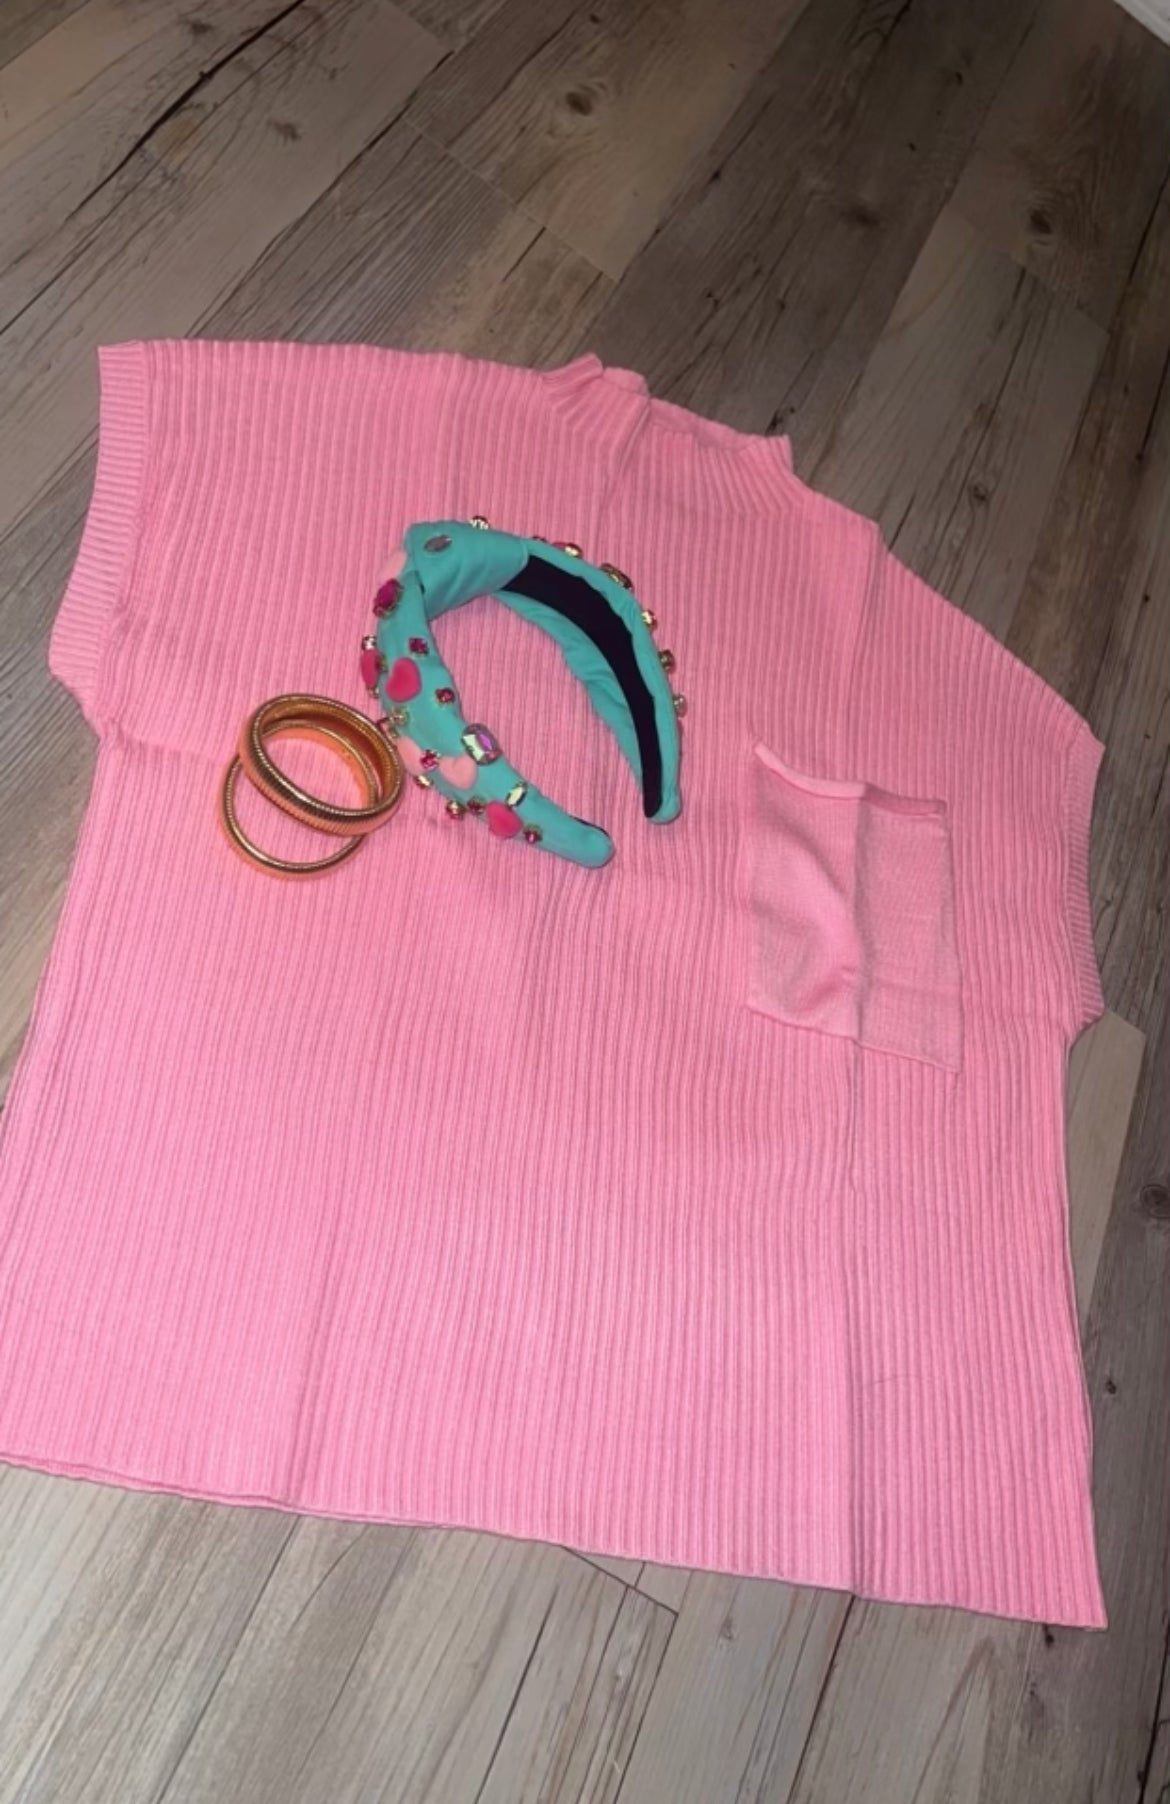 Pink short sleeve sweater